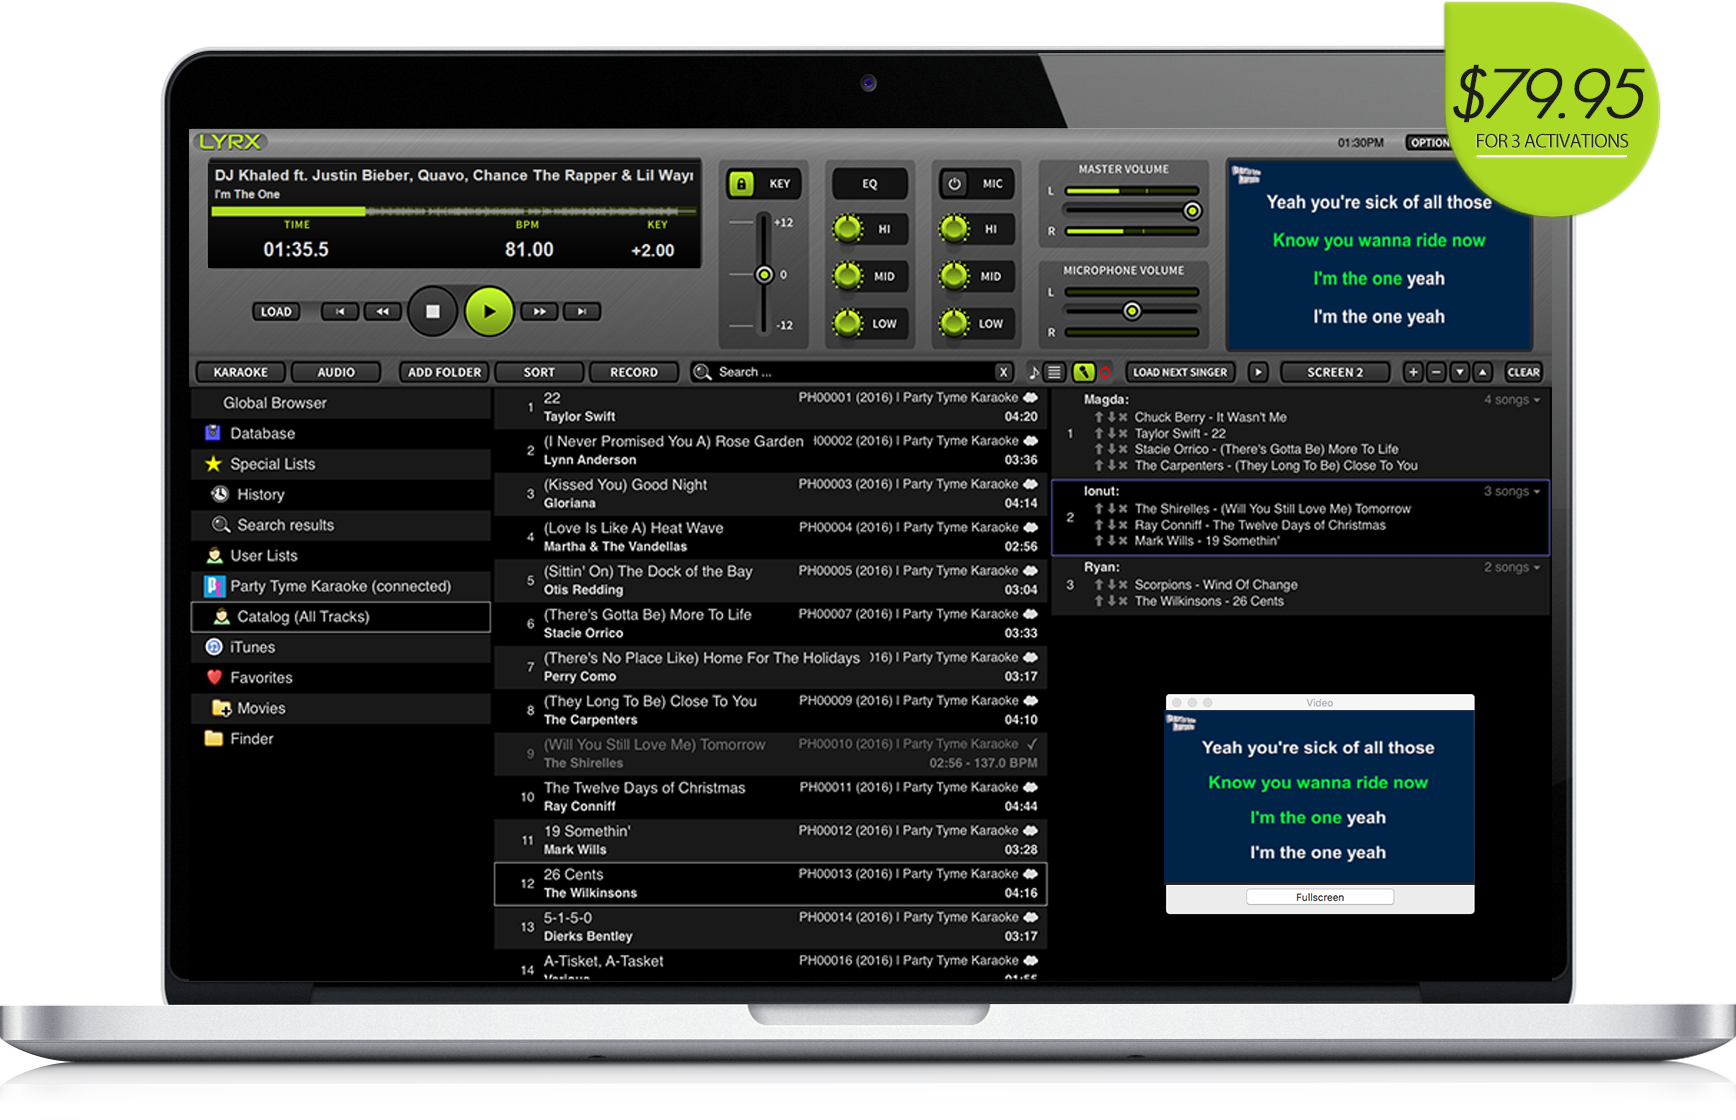 karaoke software for mac